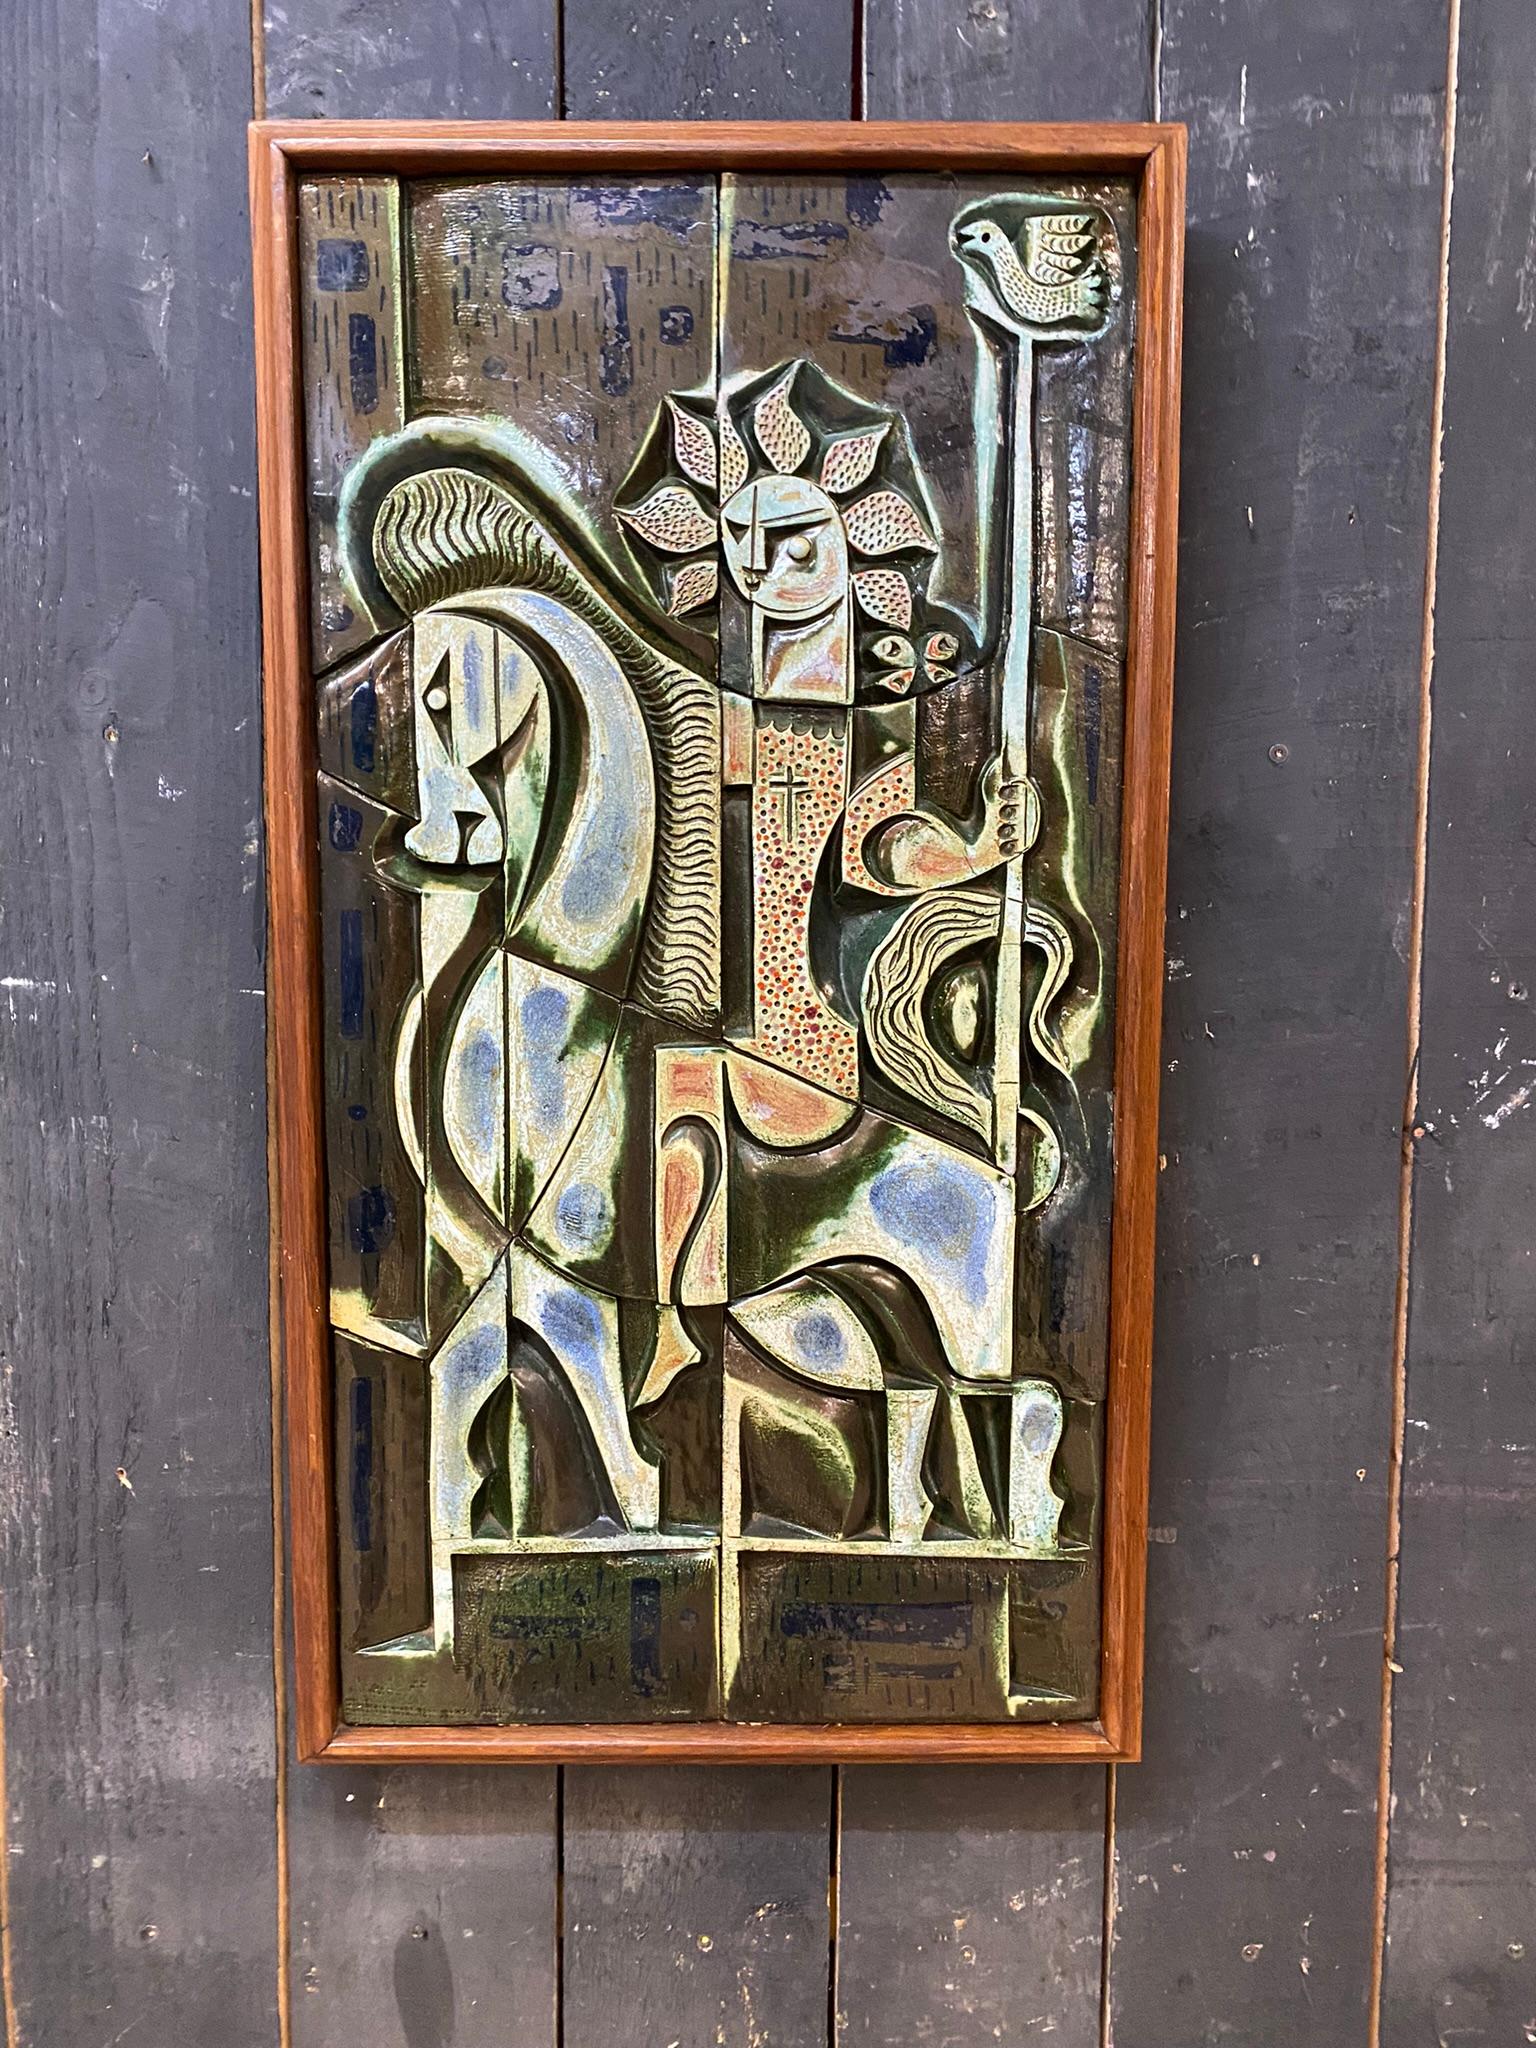 Boleslaw Danikowski Large Ceramic Panel in a Wooden Frame, circa 1950 For Sale 11